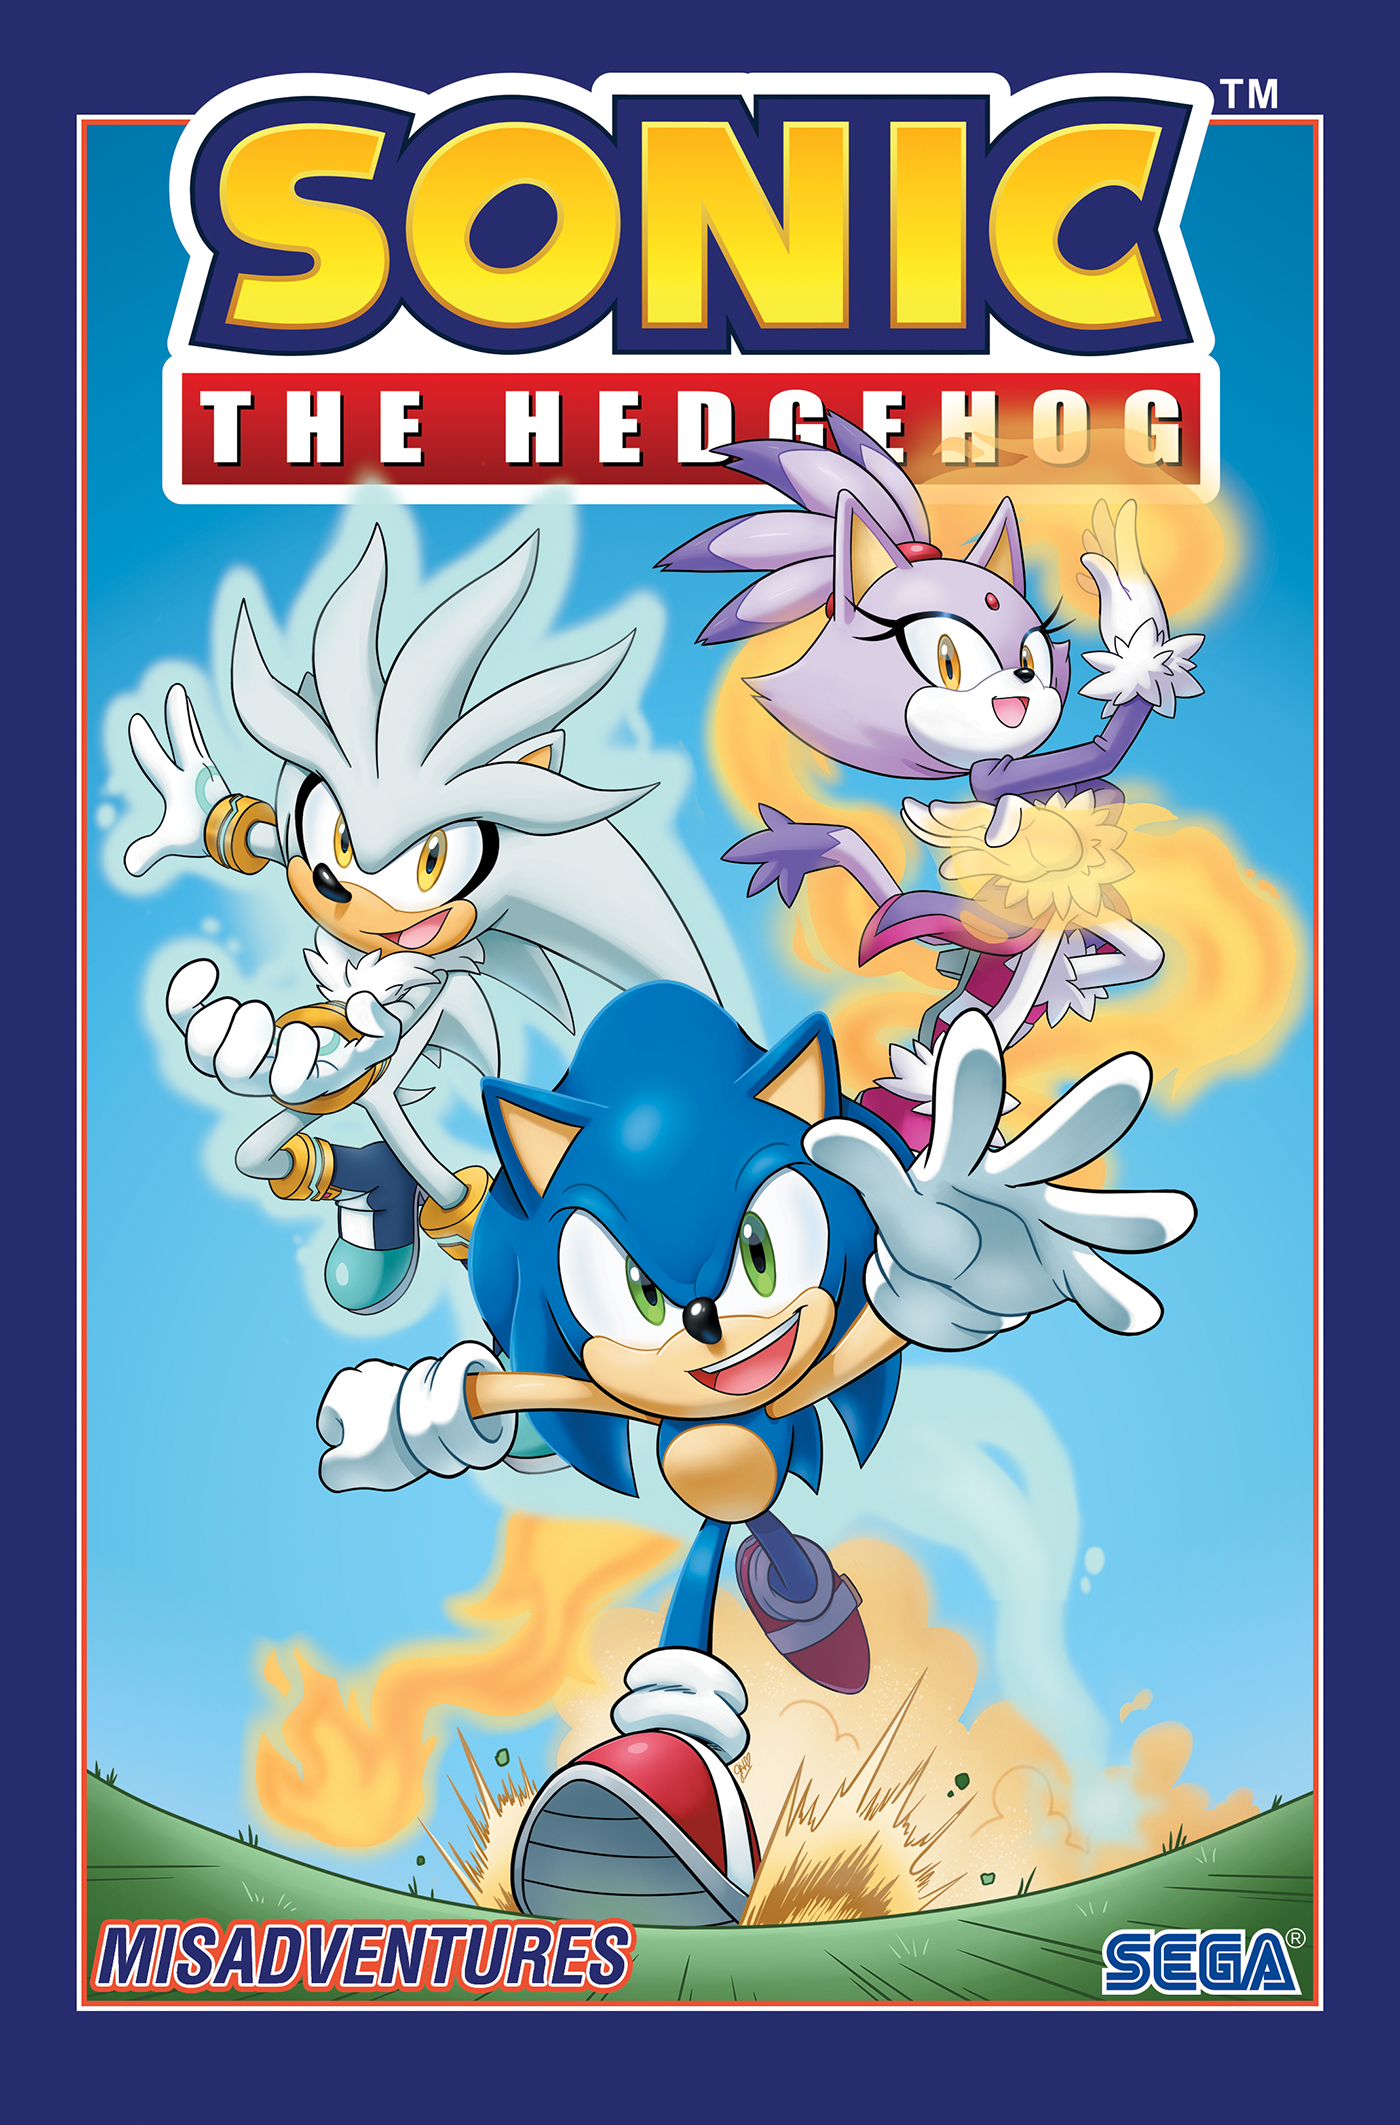 Cover RI of IDW Sonic #12 by Nathalie Fourdraine! : r/SonicTheHedgehog